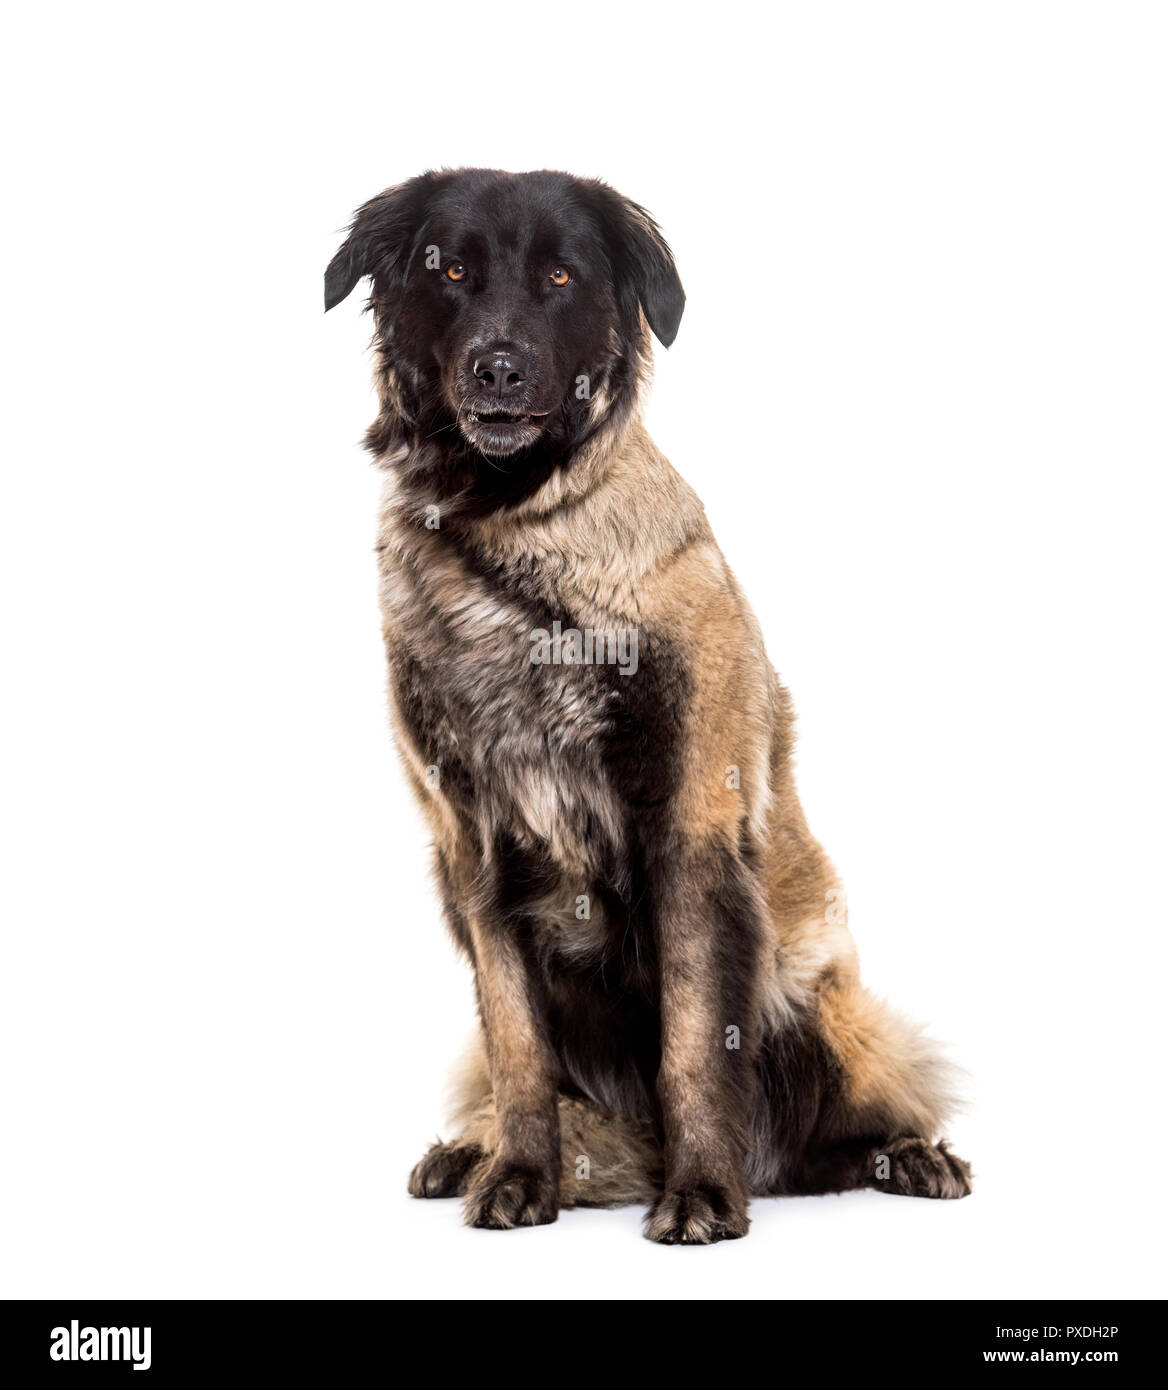 Estrela Mountain Dog, 5 years old, sitting against white background Stock Photo